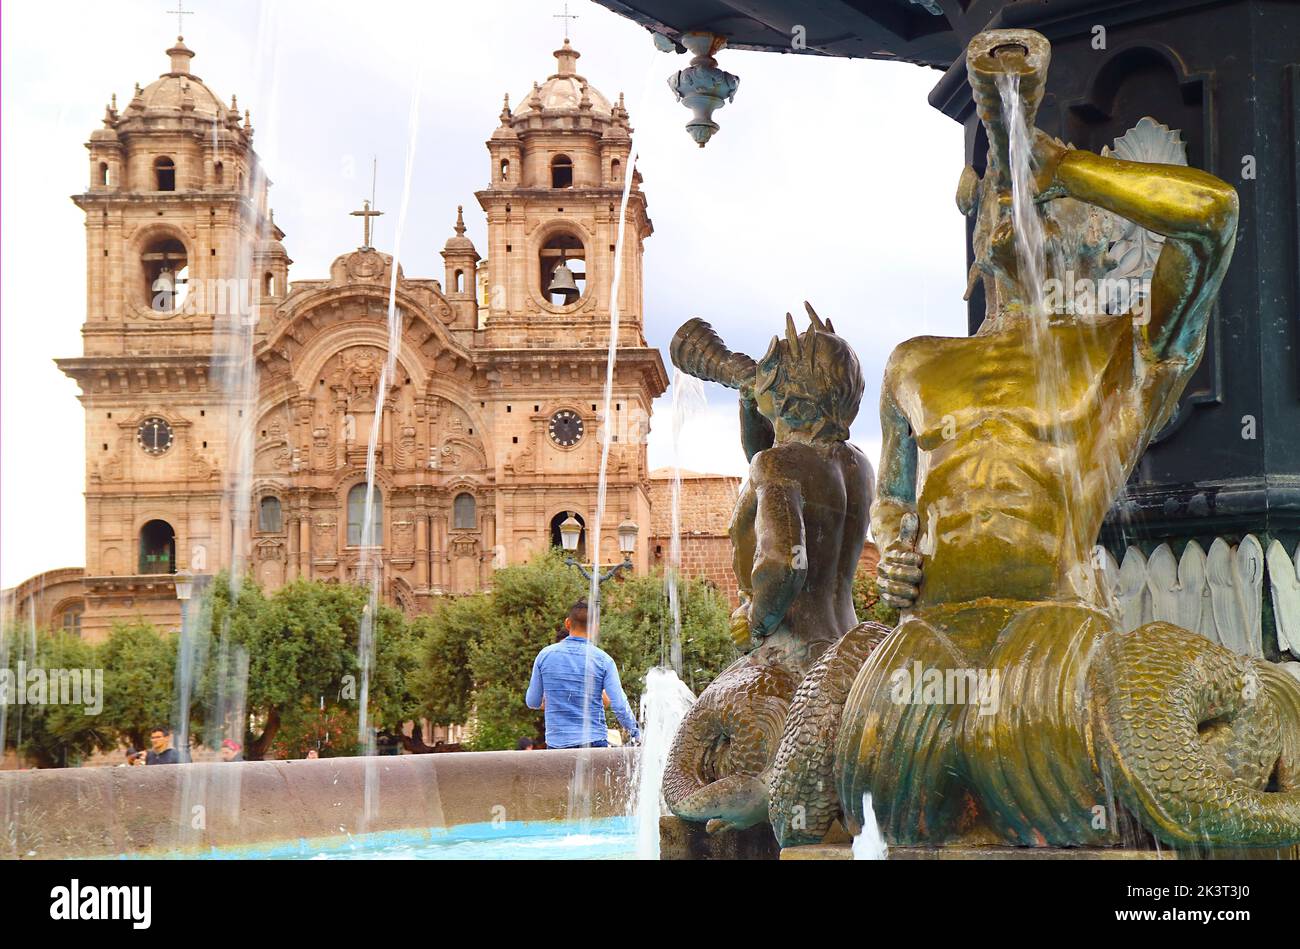 Gorgeous Fountain with Church of the Society of Jesus or Iglesia de la Compania de Jesus in the Backdrop, Historic Center of Cusco, Peru Stock Photo